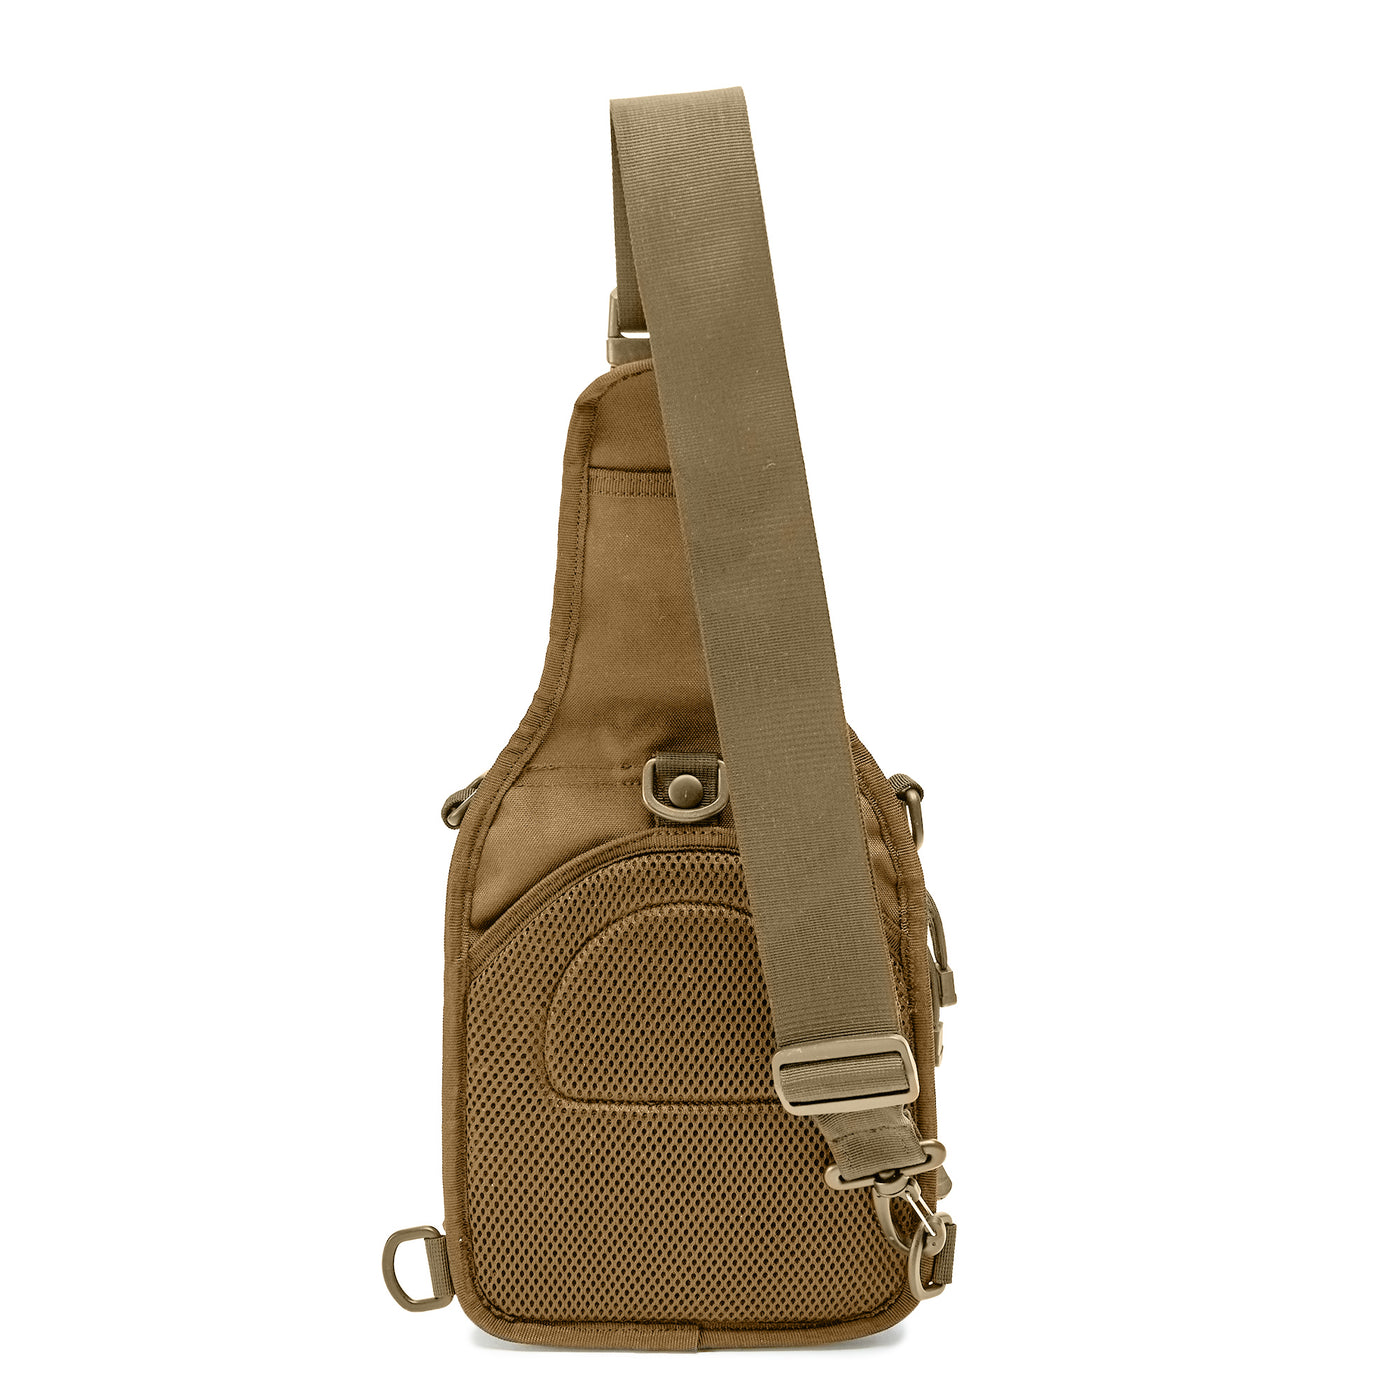 70% OFF on ARV Brown Sling Bag Texture on Flipkart | PaisaWapas.com